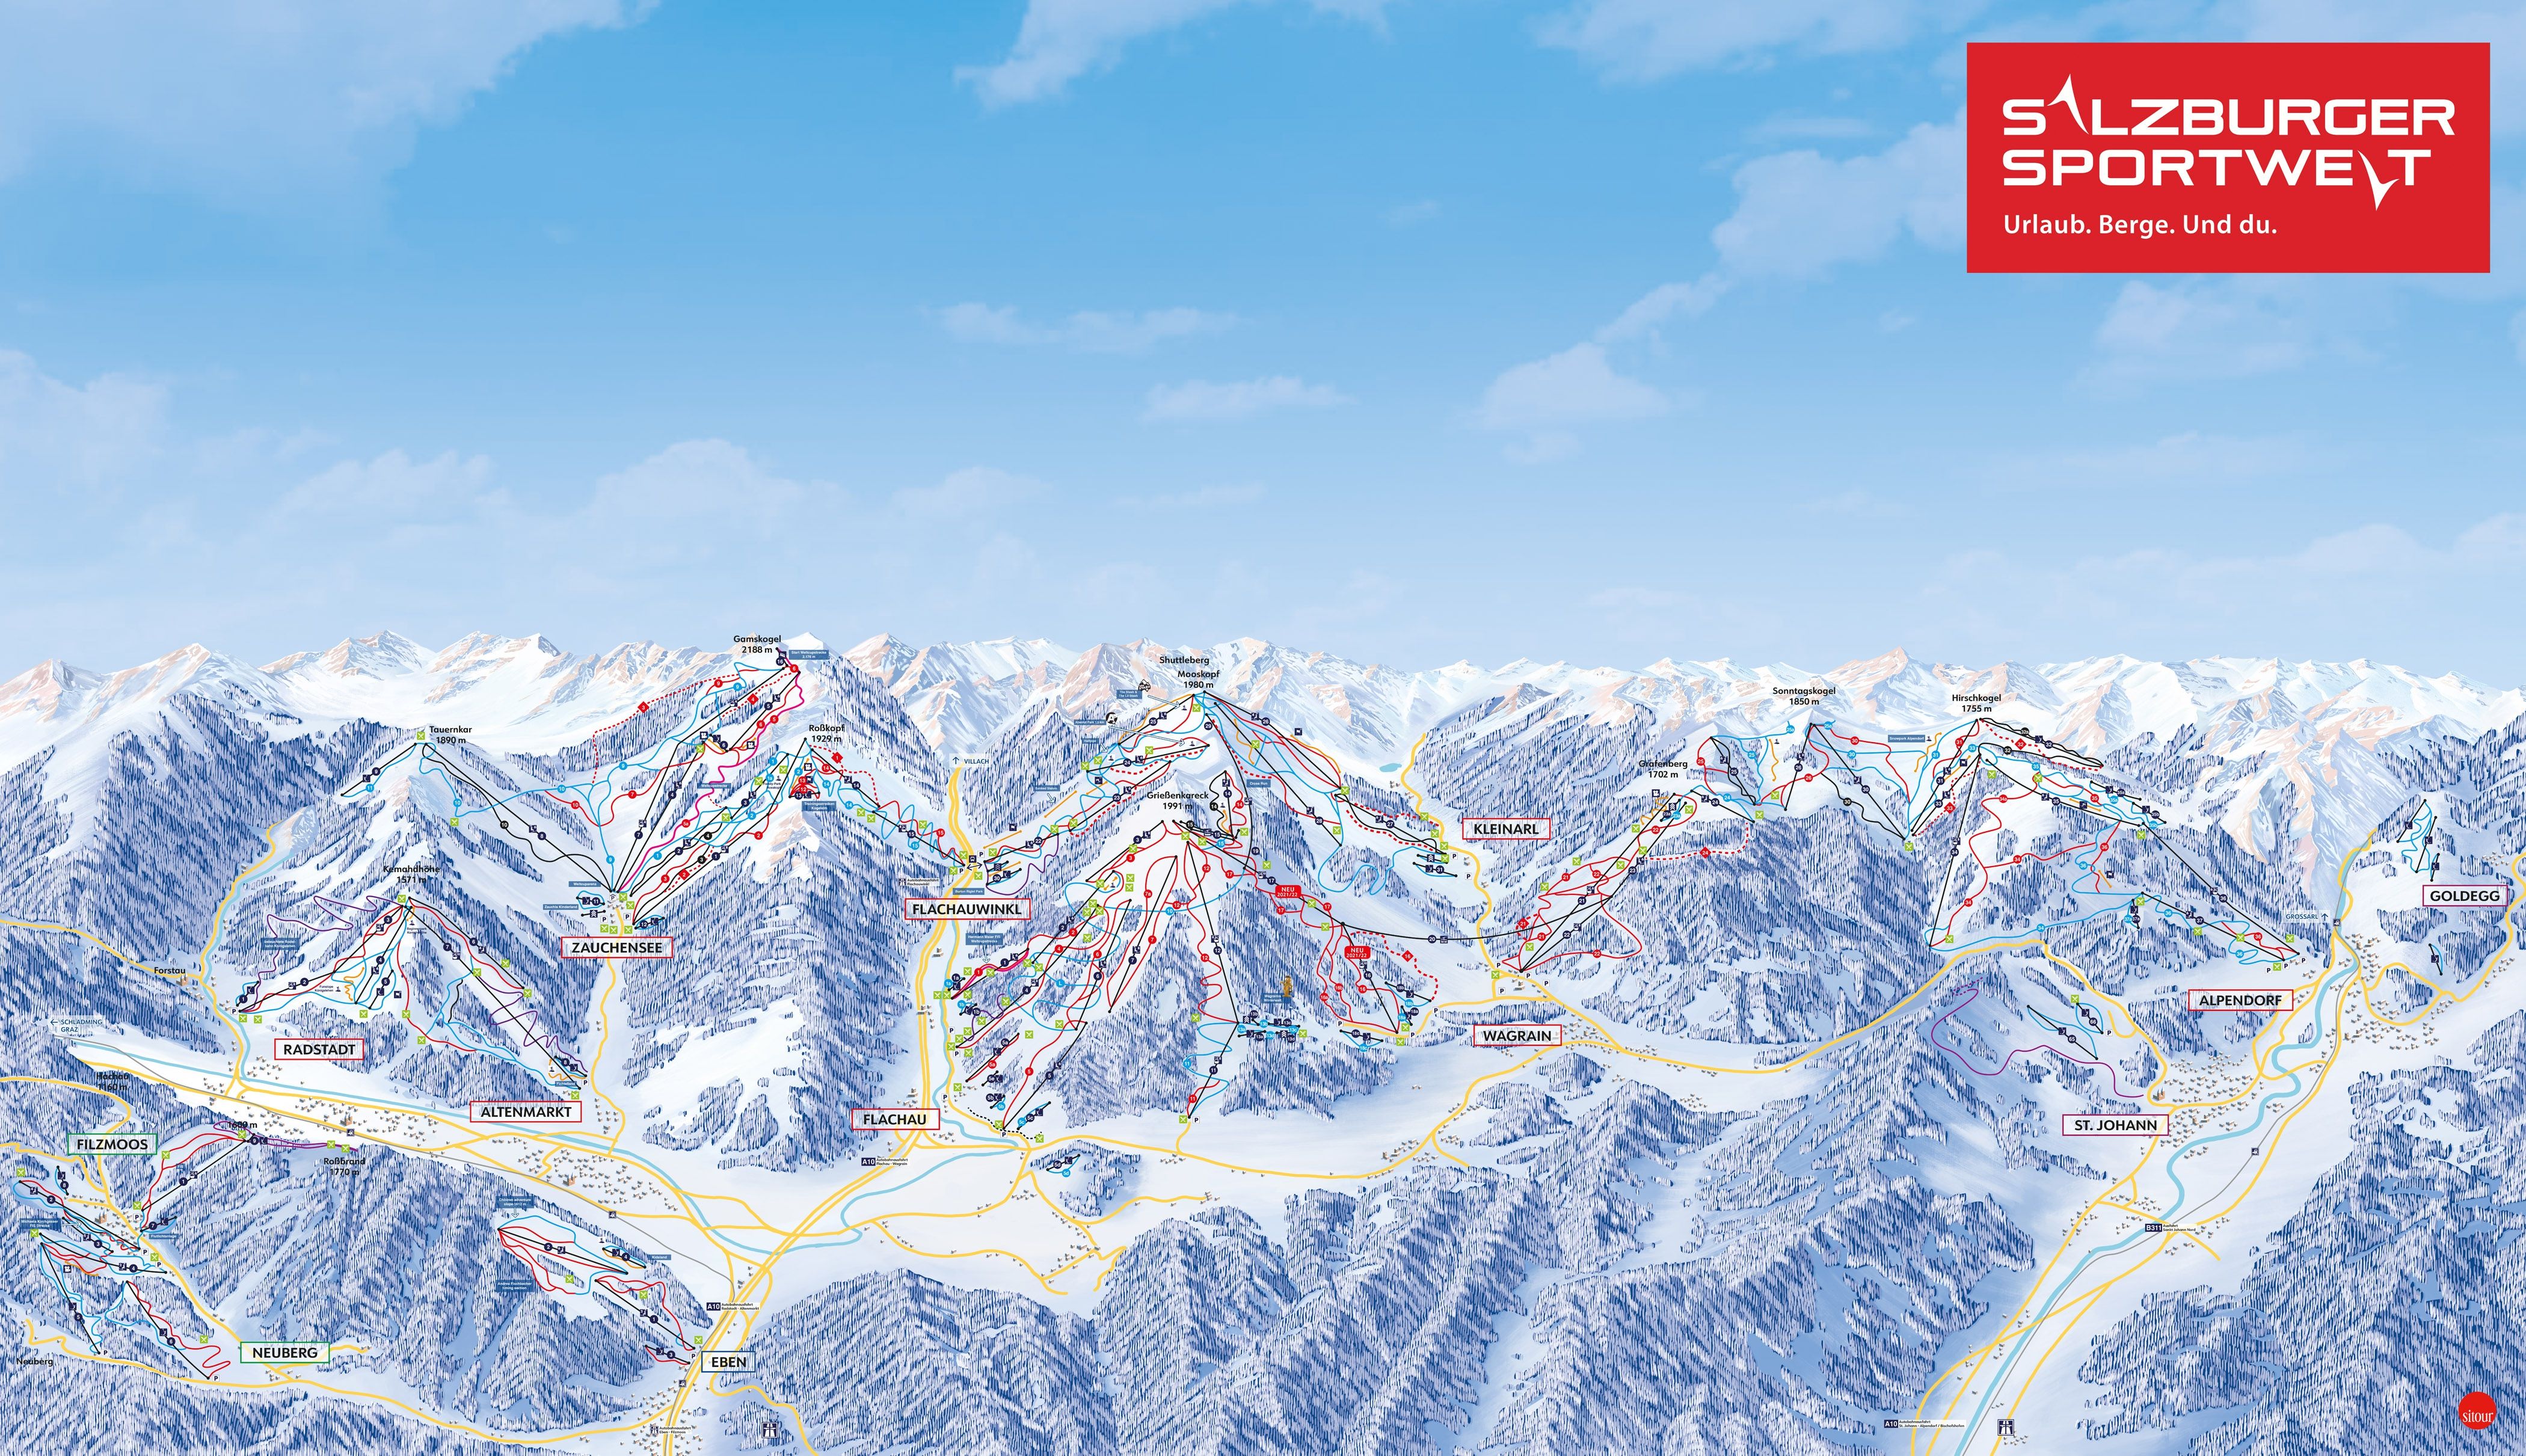 Pistekaart Salzburger Sportwelt - skigebied met 244km piste in Oostenrijk